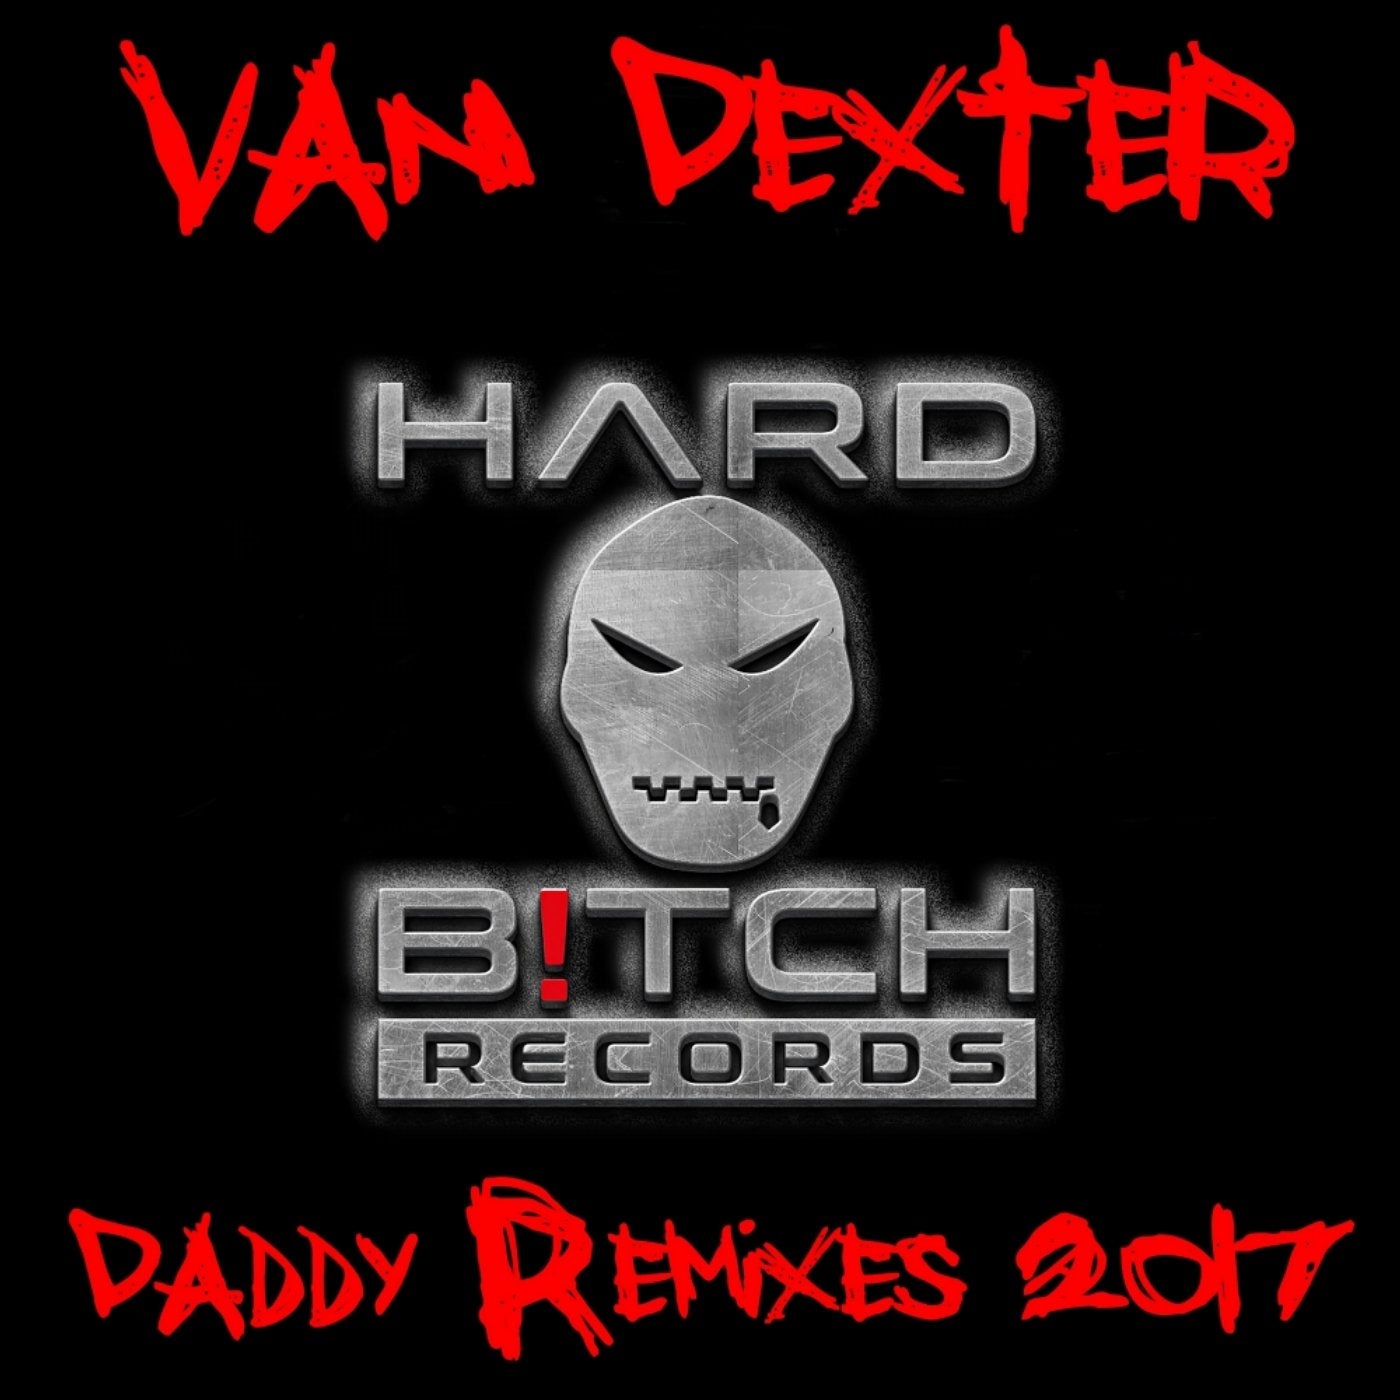 Daddy Remixes 2017